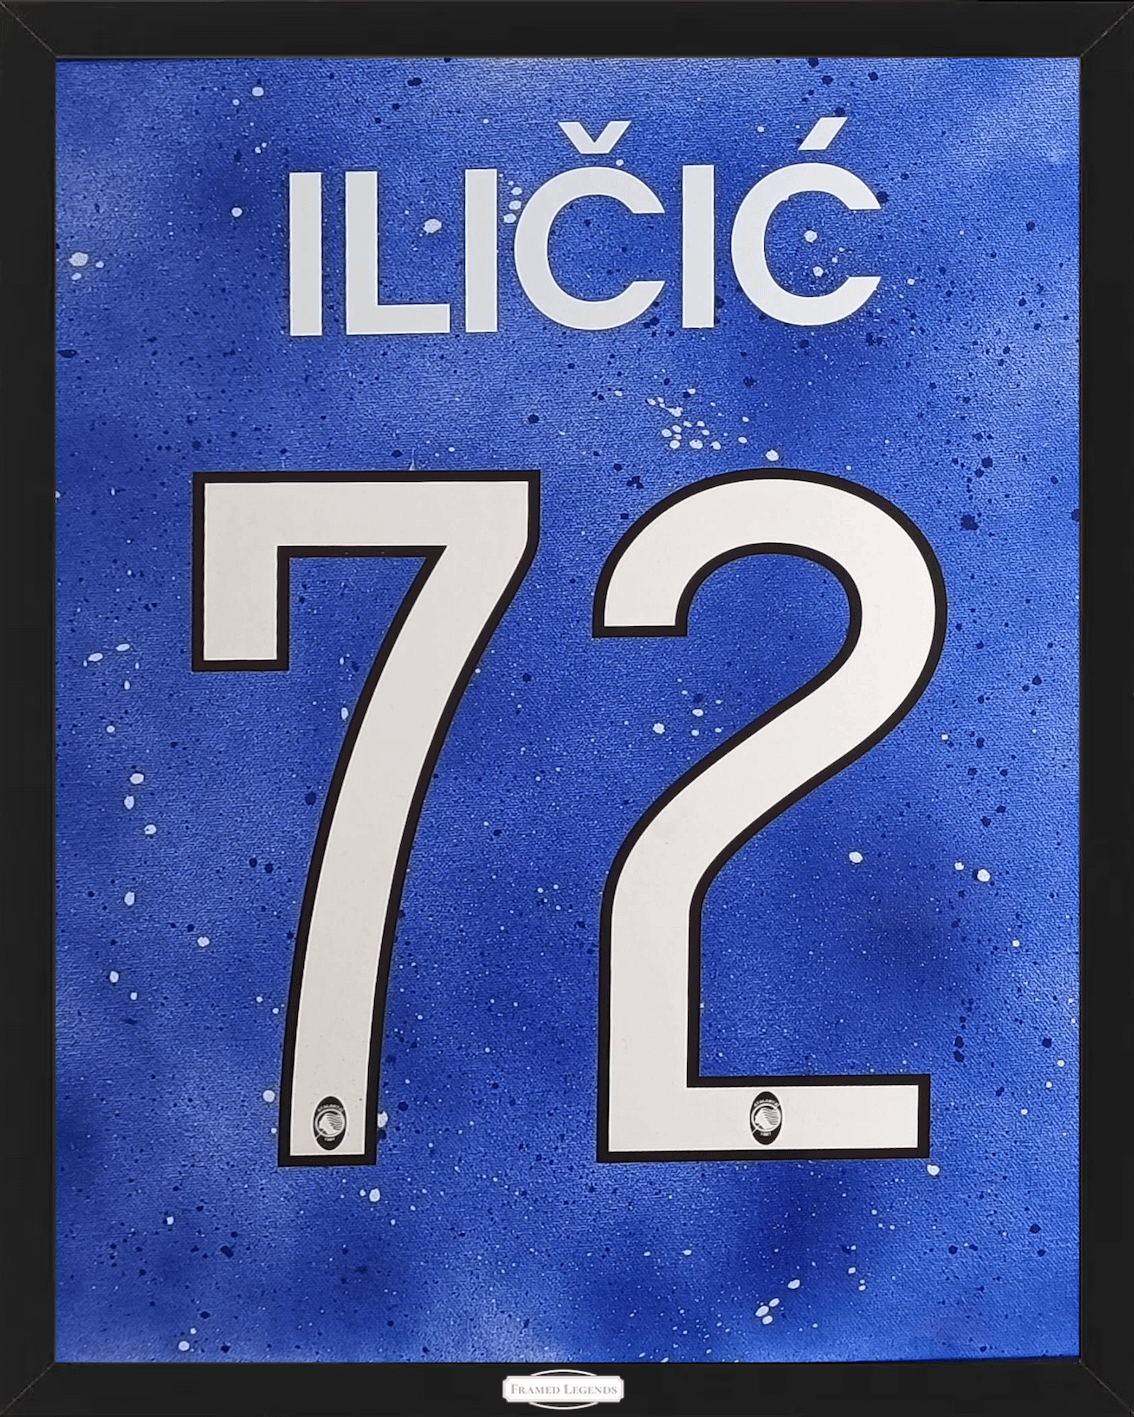 Artwork Atalanta Bergamasca Calcio Theme Josip Ilicić Limited Edition